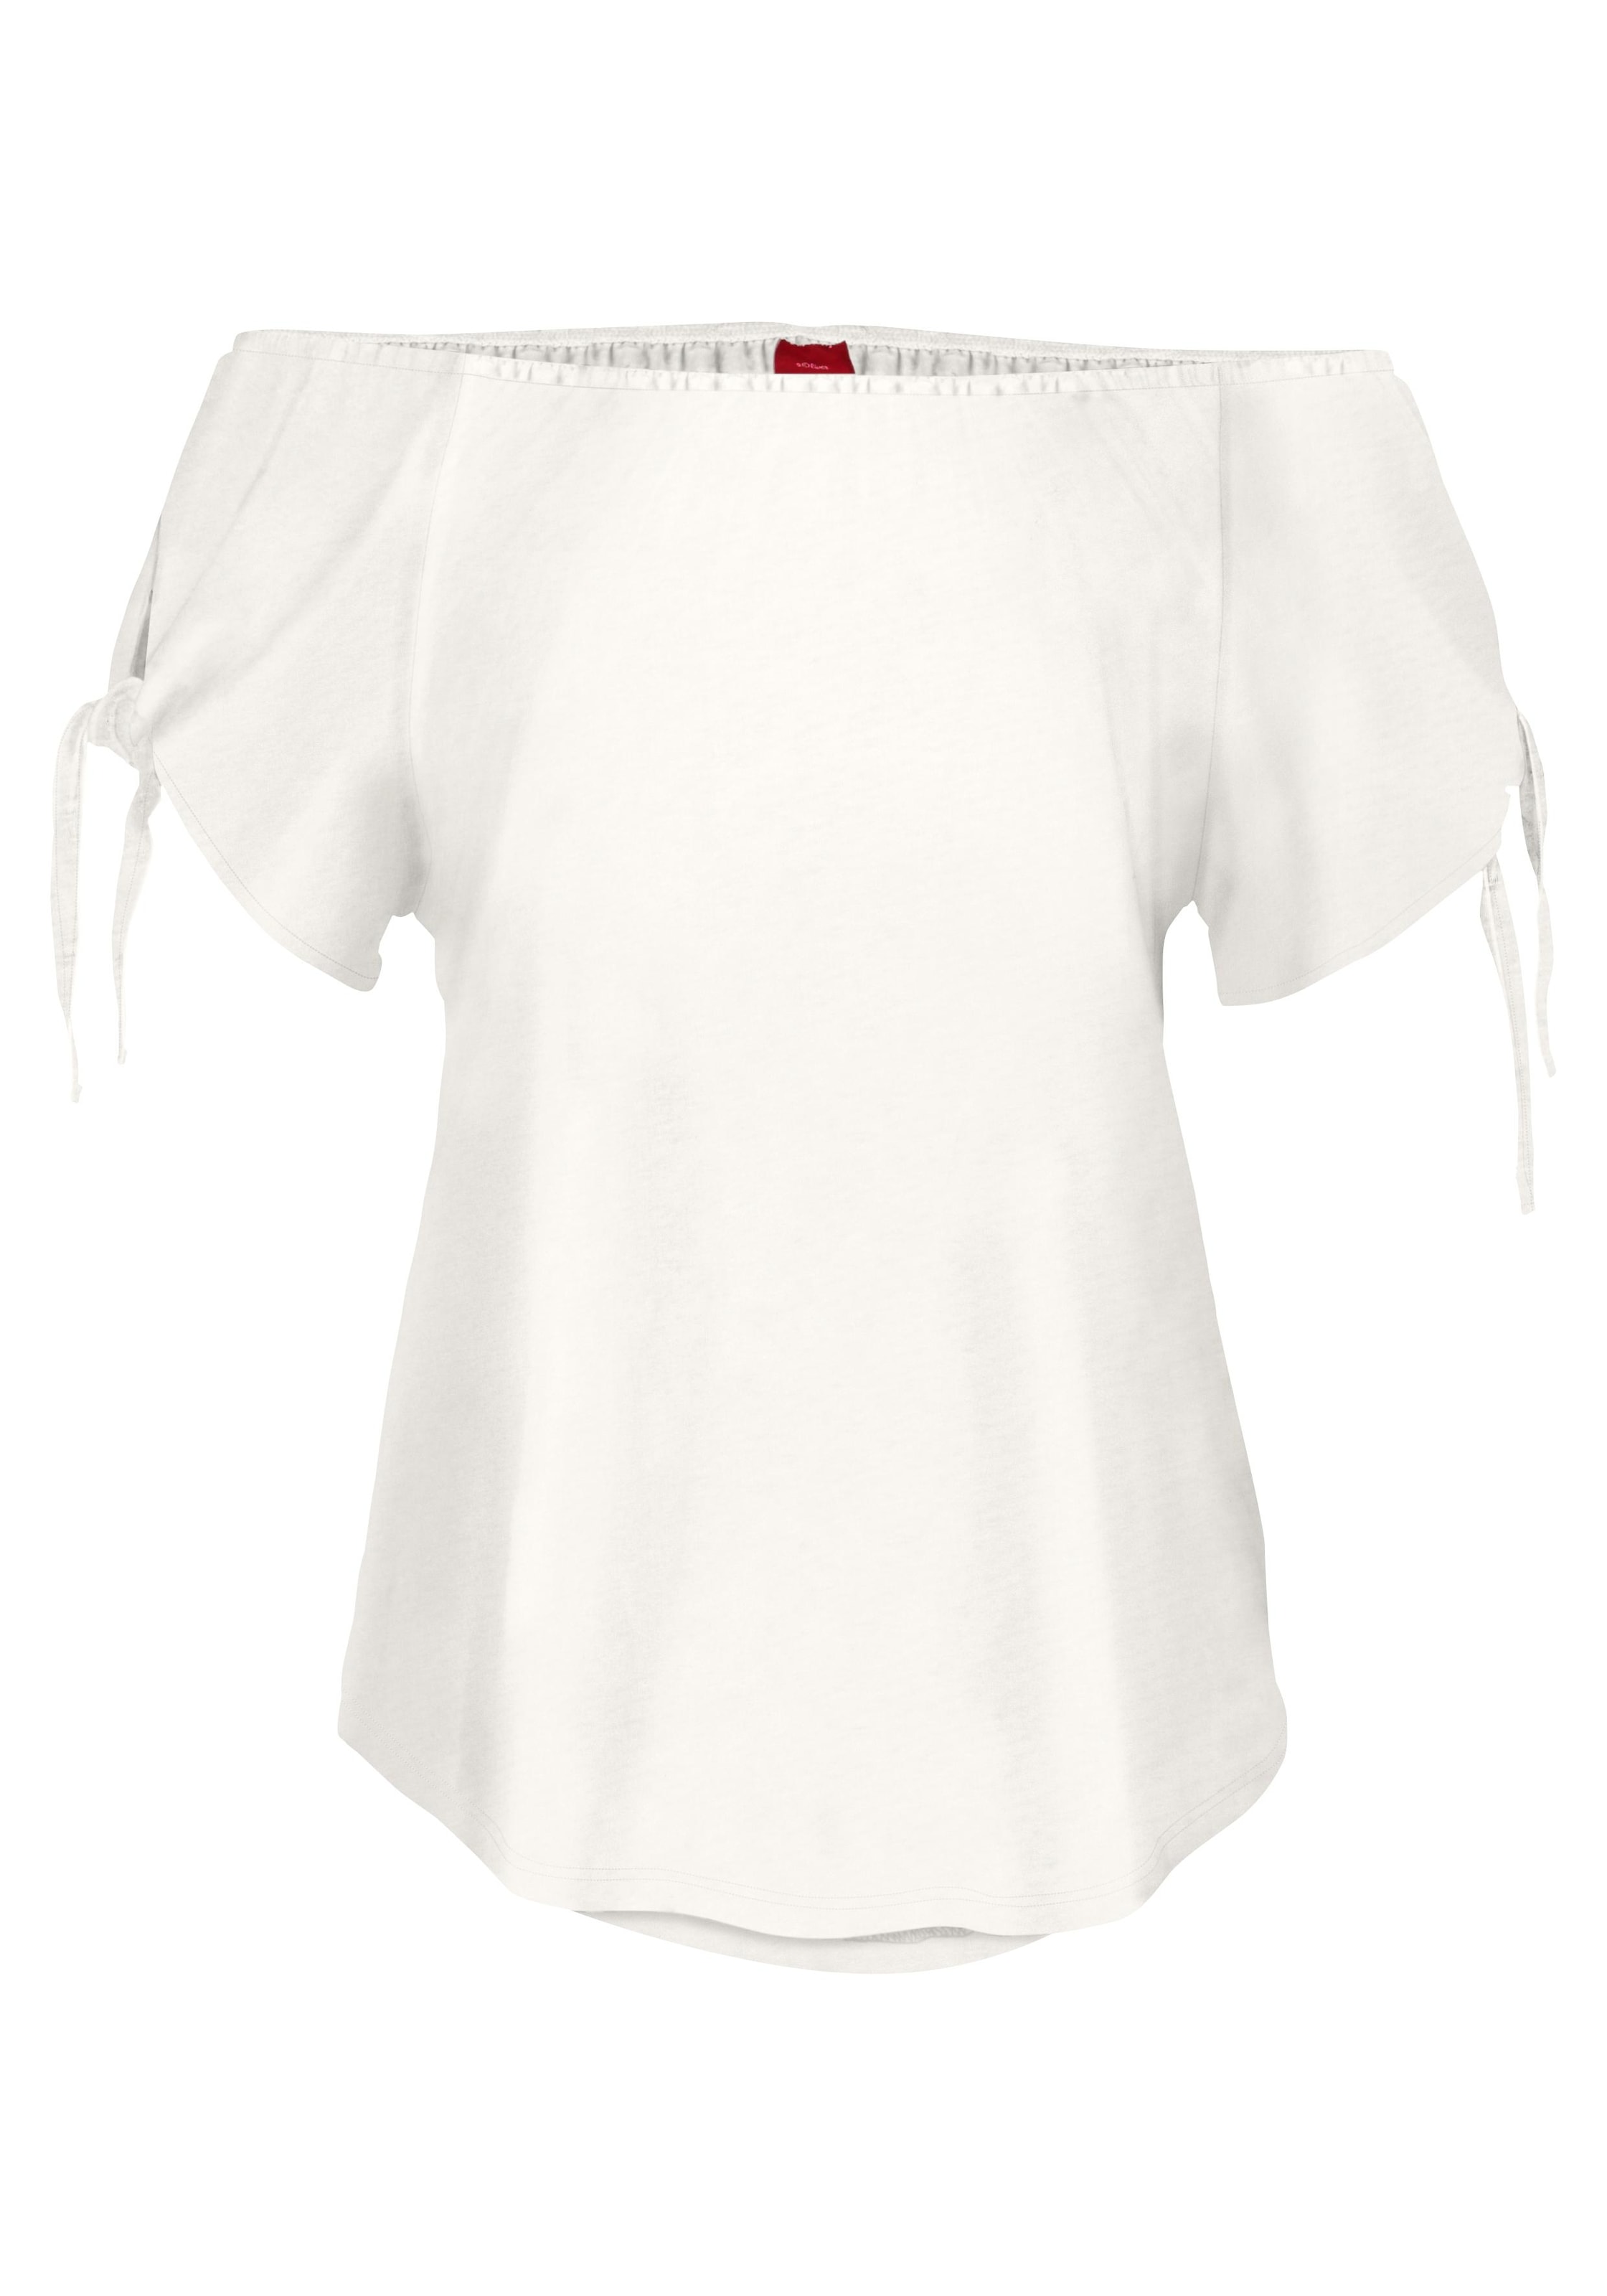 s.Oliver T-Shirt, mit Schlitzen an schulterfrei den variierbar als Ärmeln, bestellen Carmenshirt